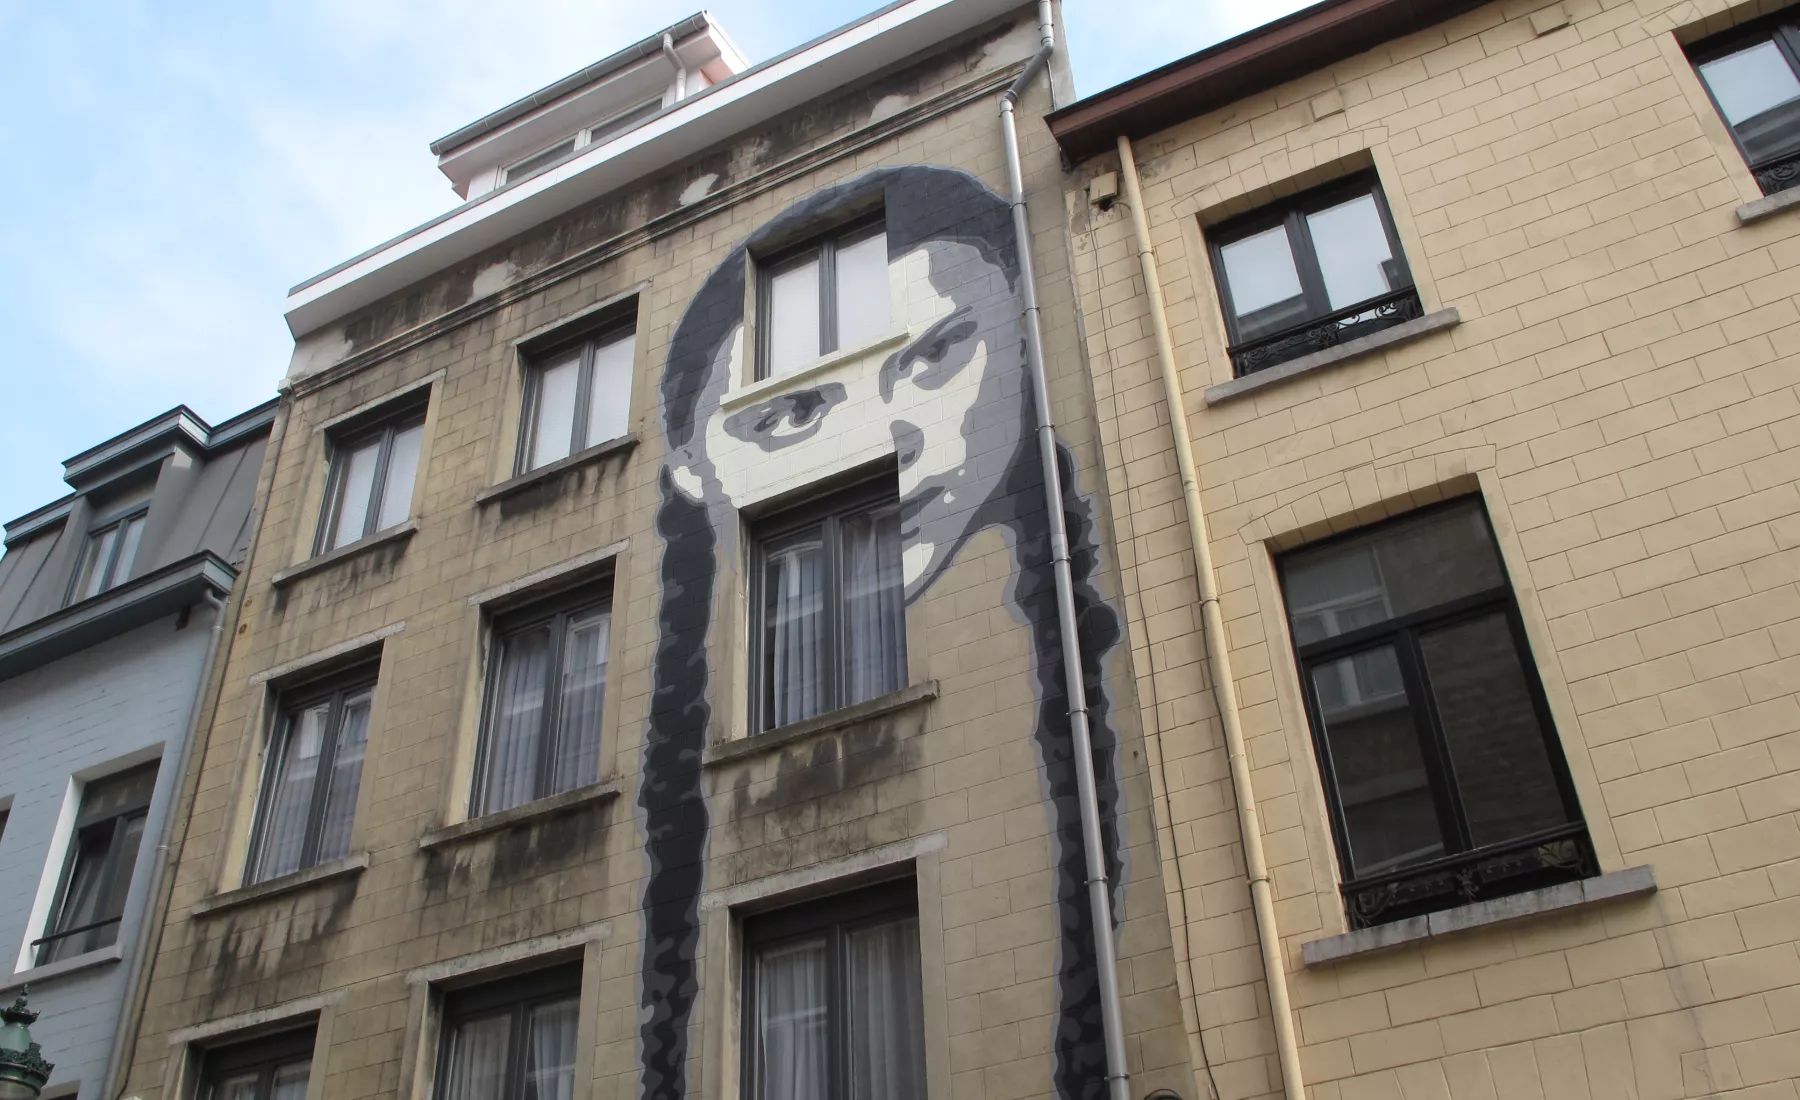 Greta Thunberg Graffiti in Brüssel 